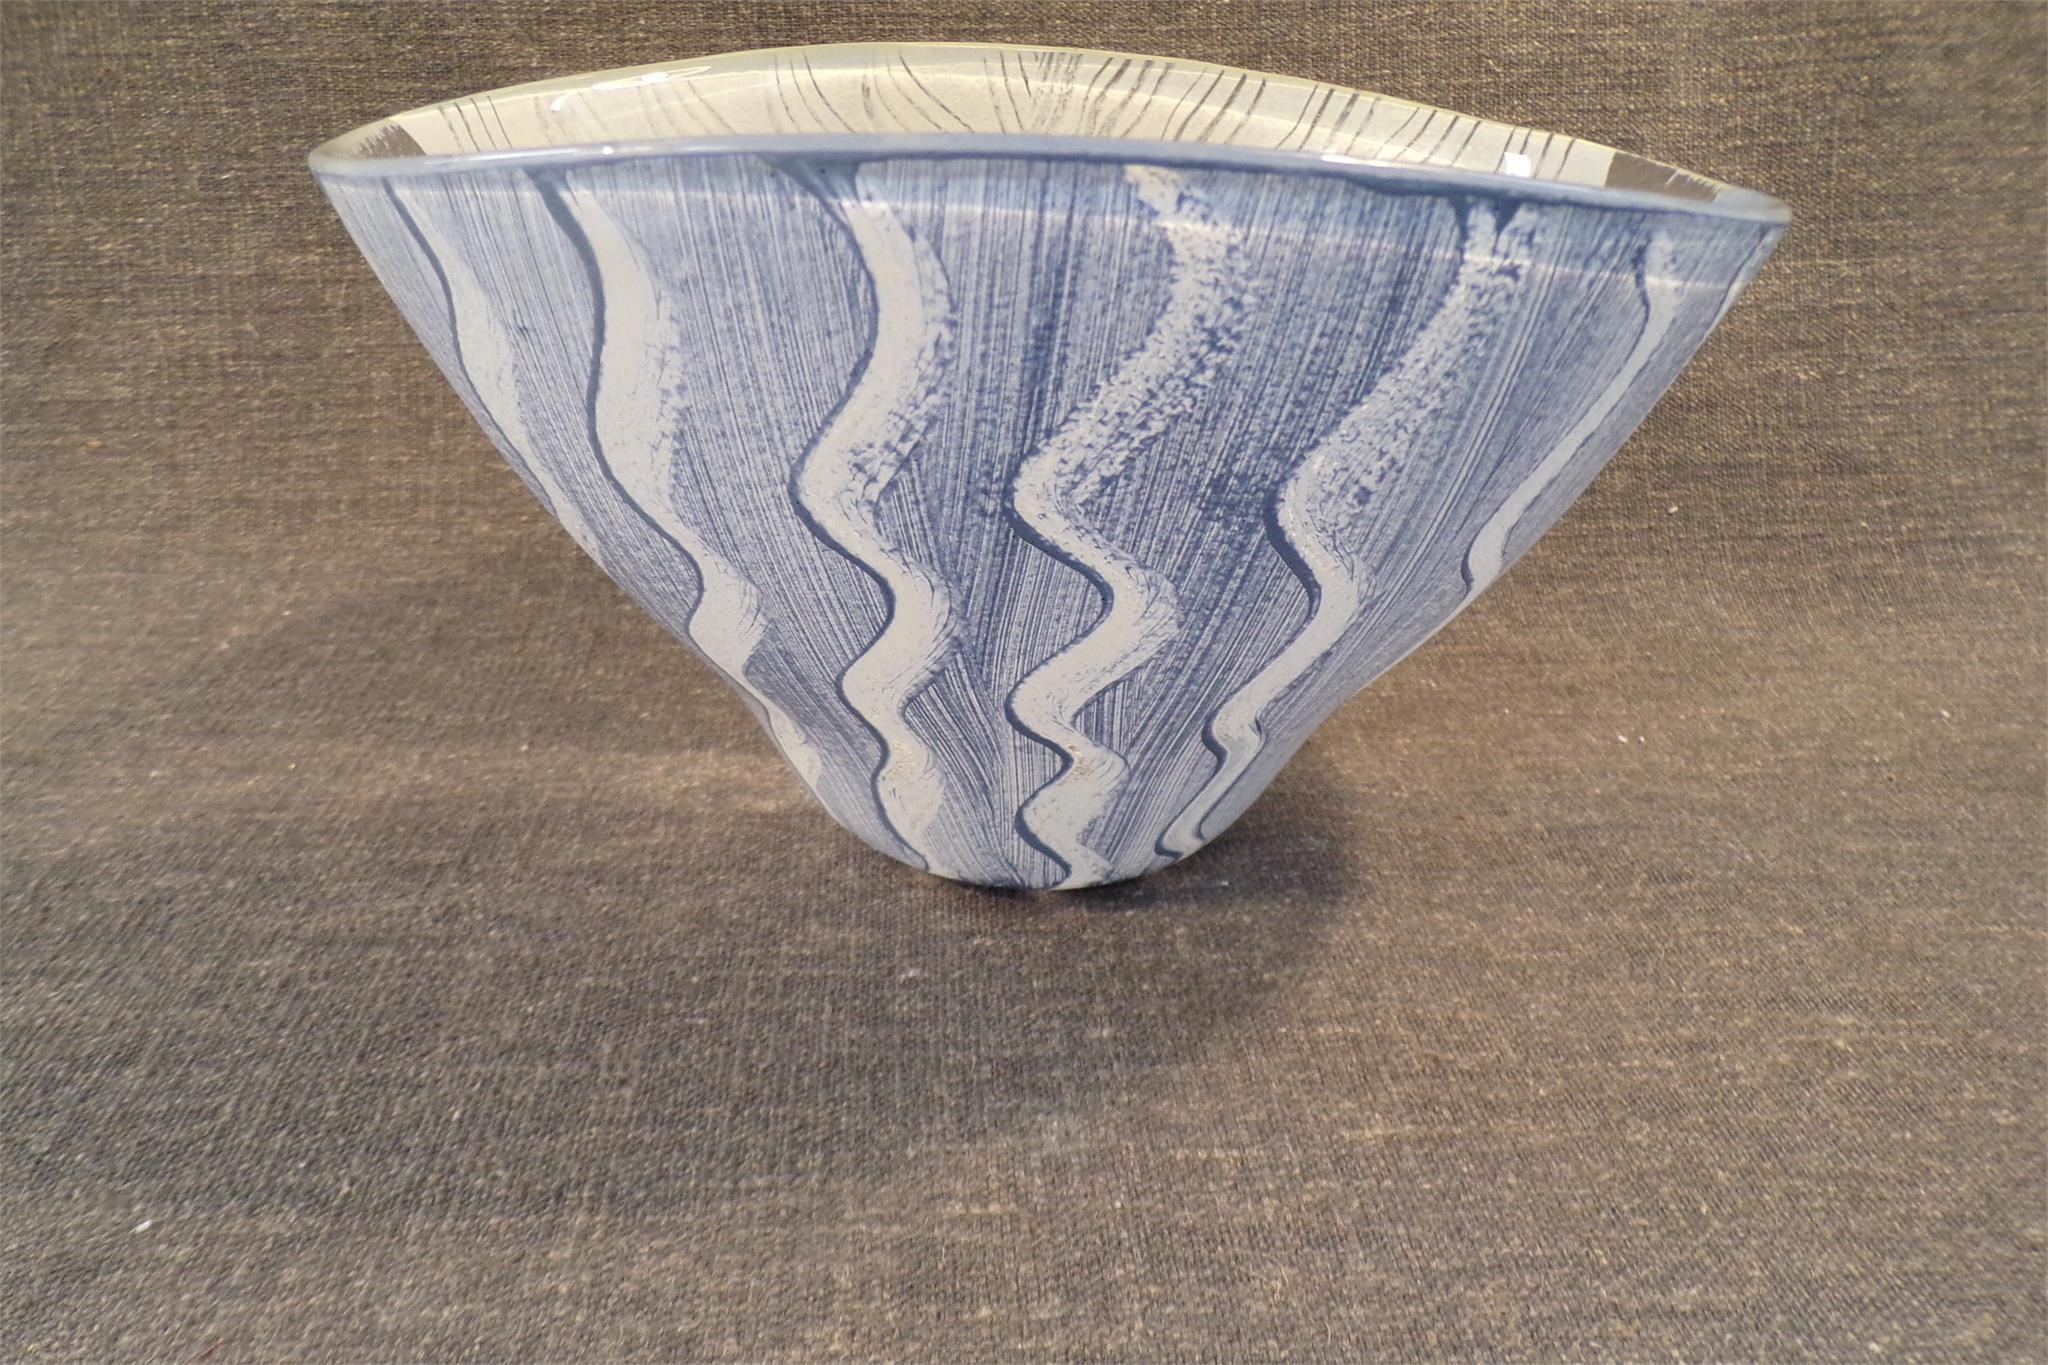 Kosta Boda "Tonga" Glass Bowl by Monica Backström